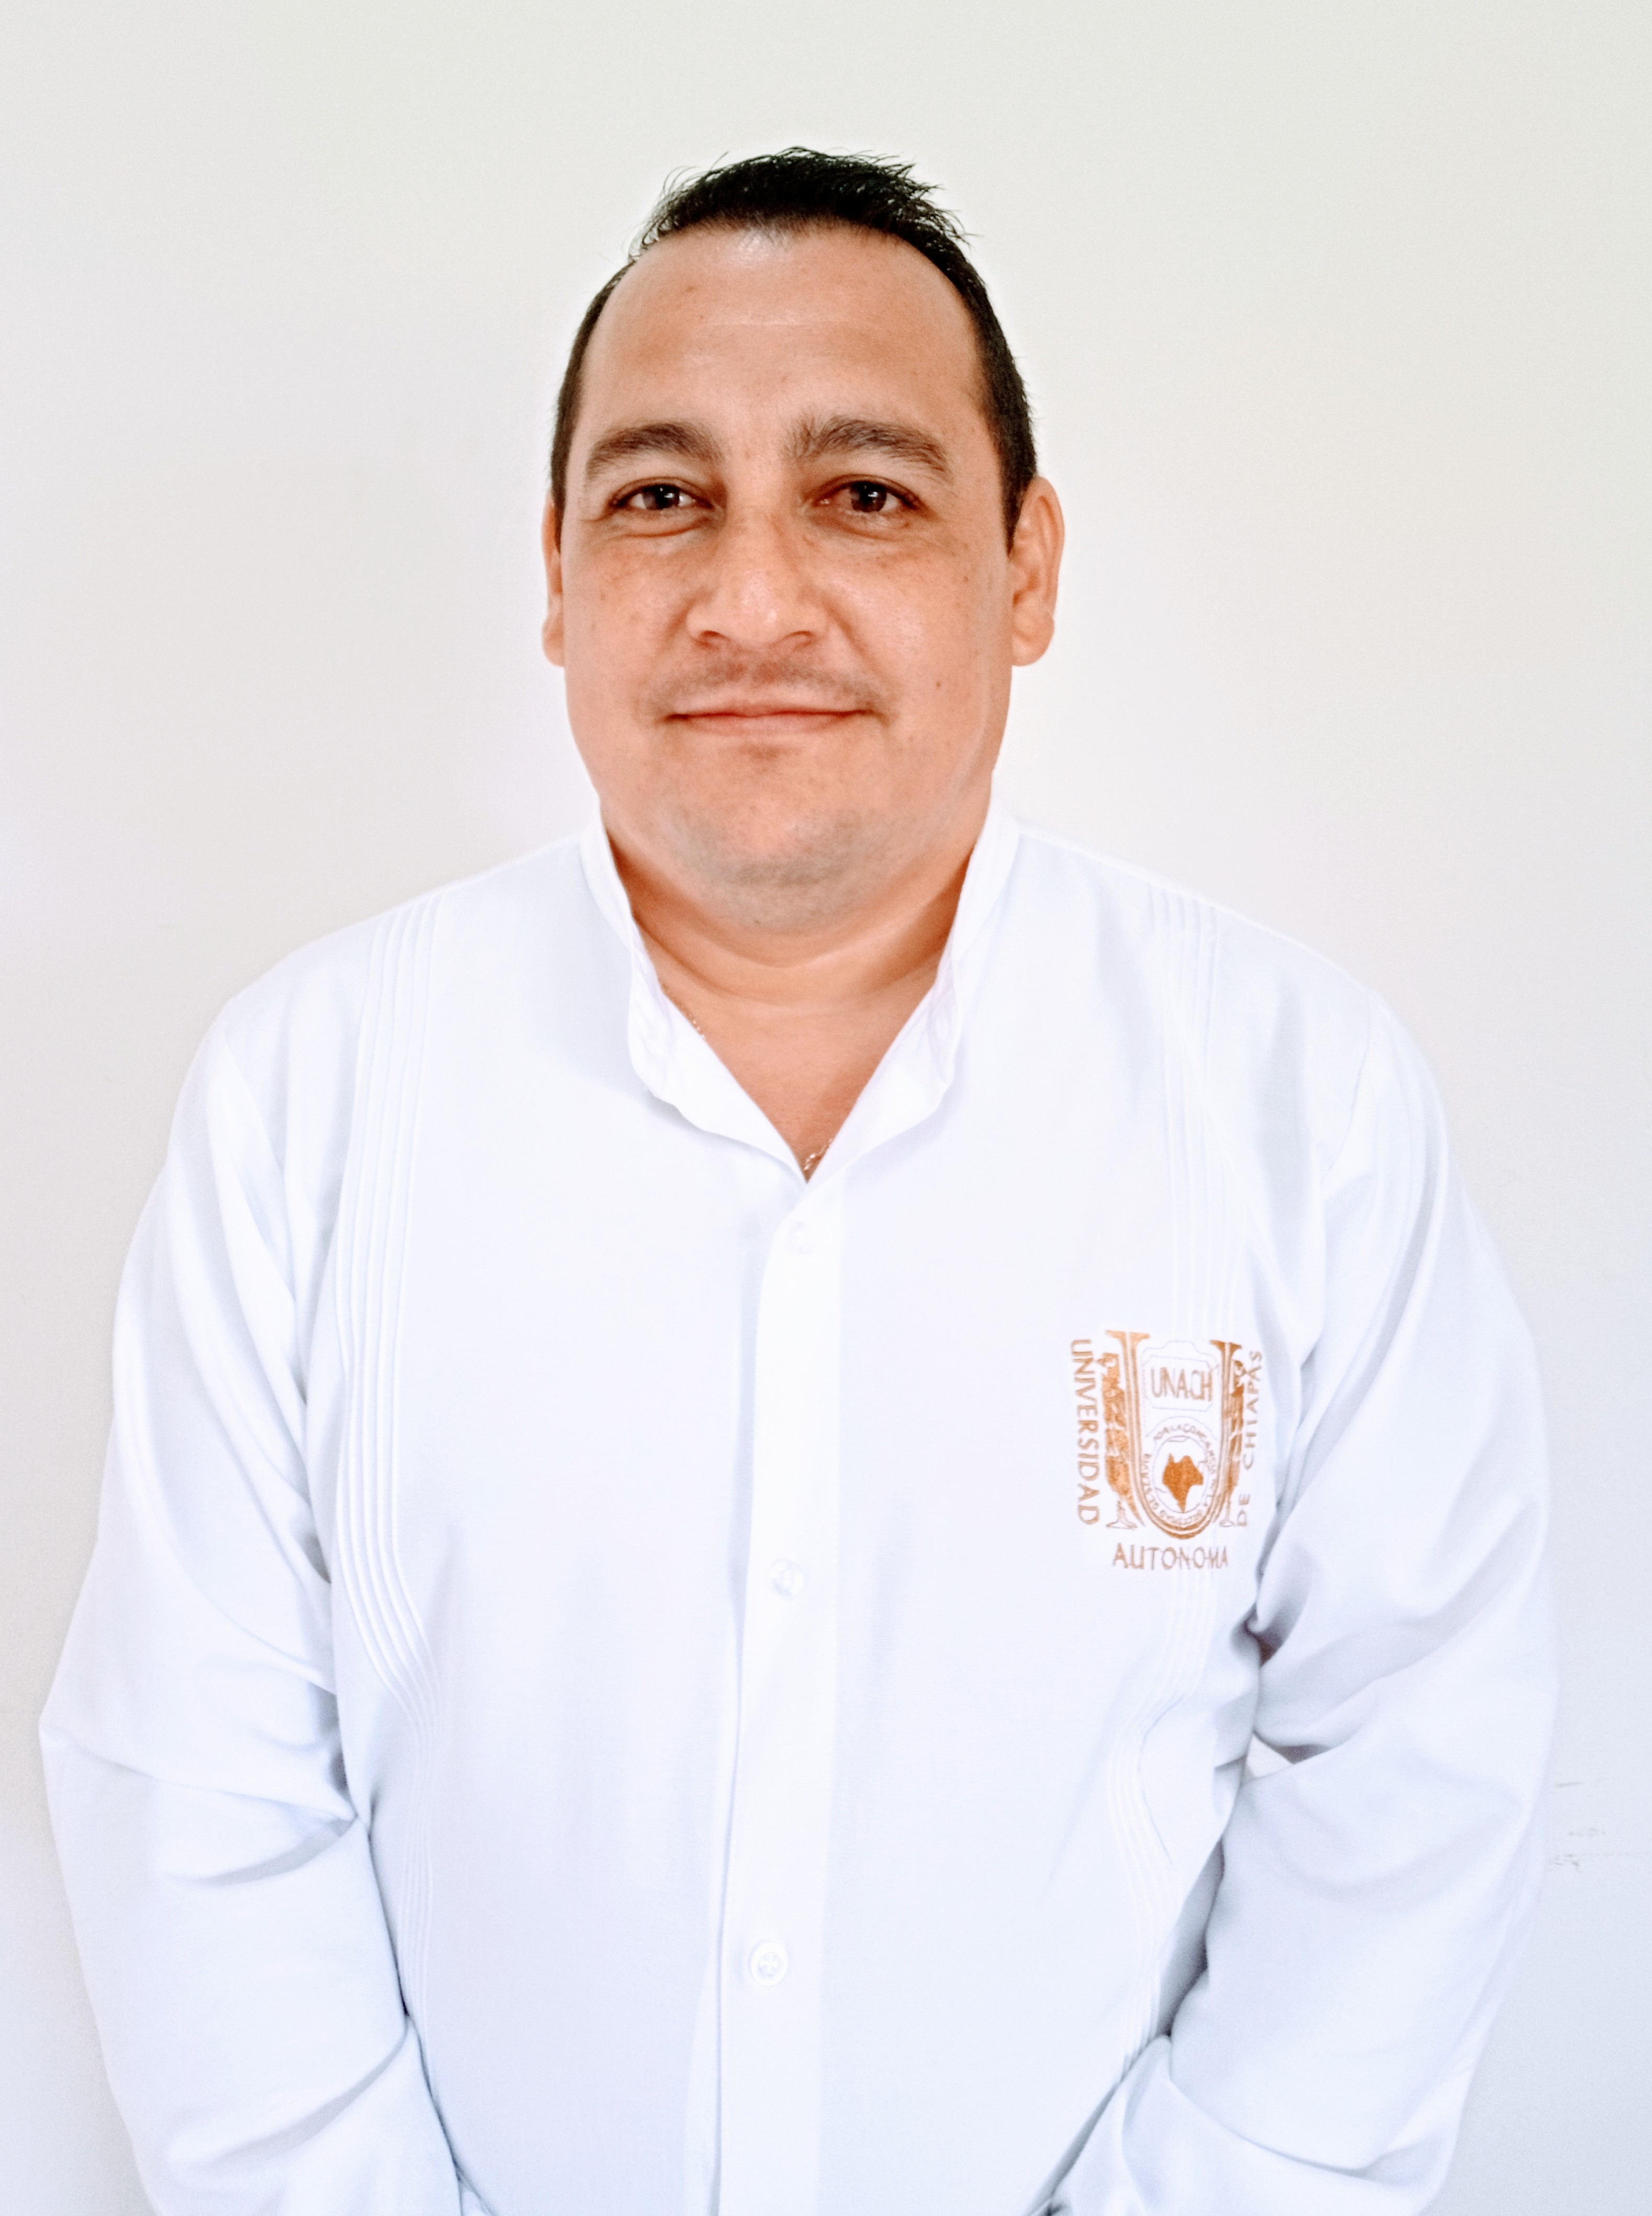 Dr. Belisario Pimentel Maza